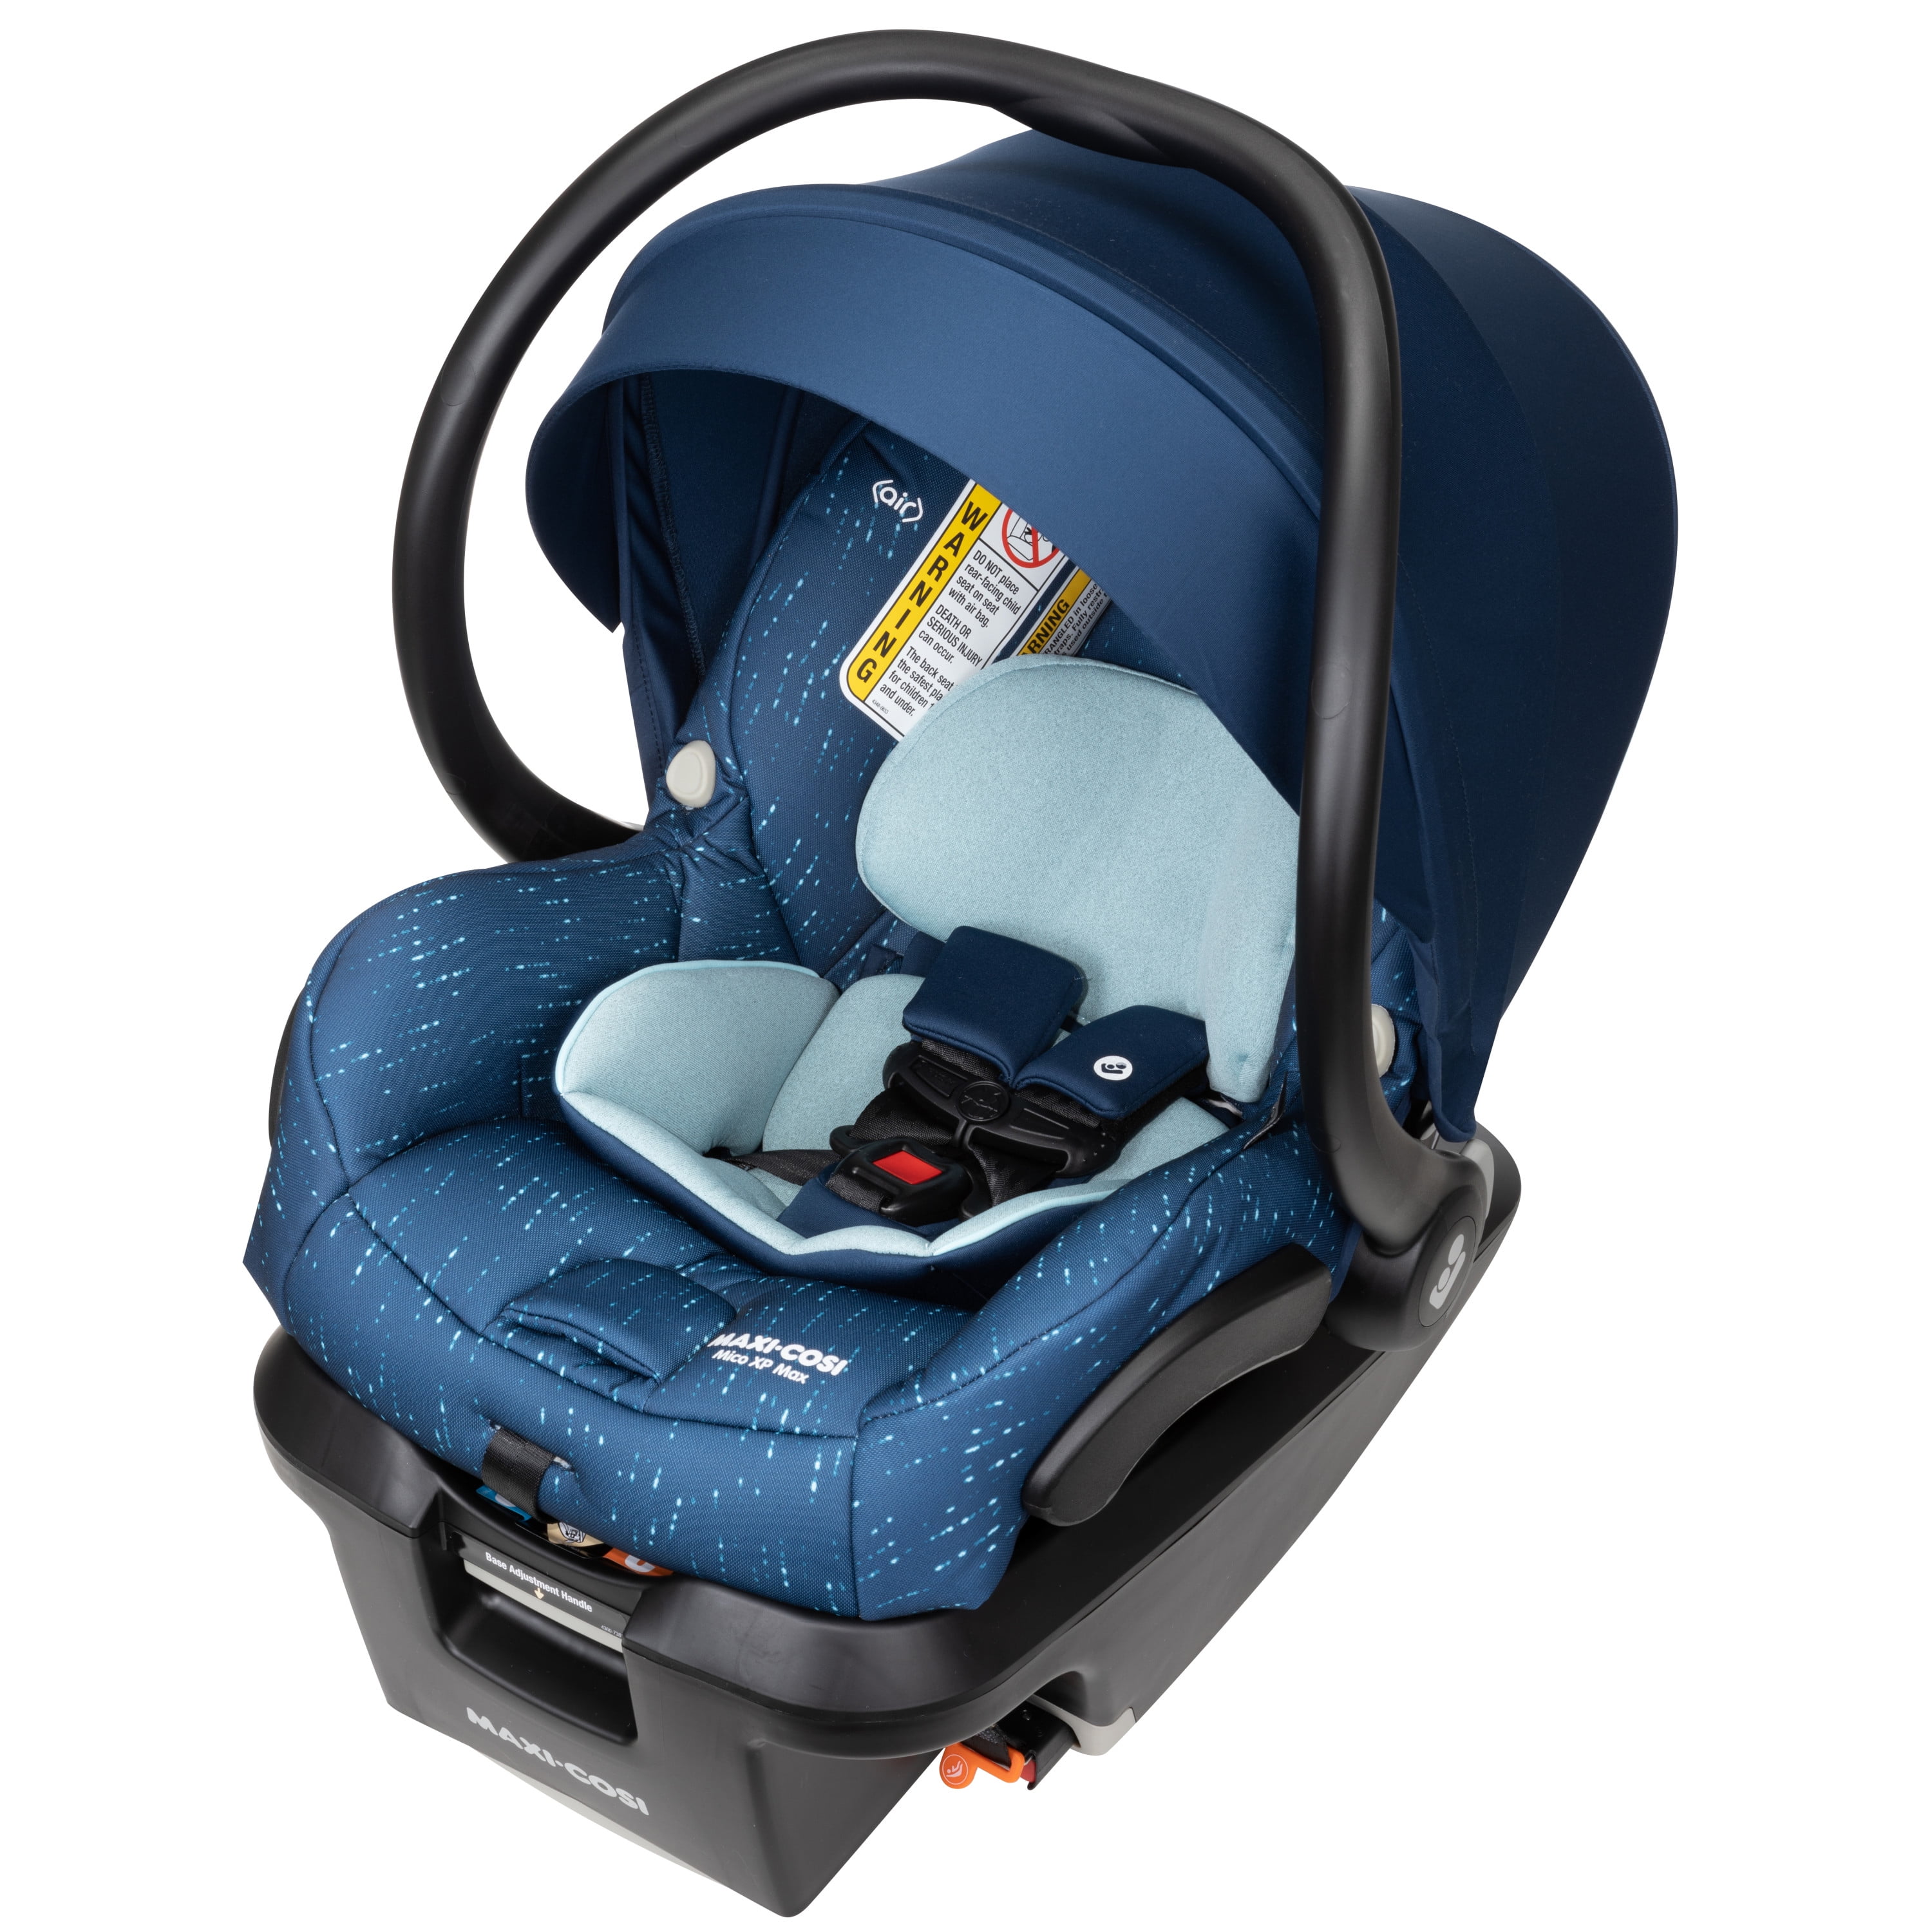 Maxi Cosi Mico Xp Max Infant Car Seat Sonar Blue Purecosi Com - Infant Car Seat Weight Limit Maxi Cosi